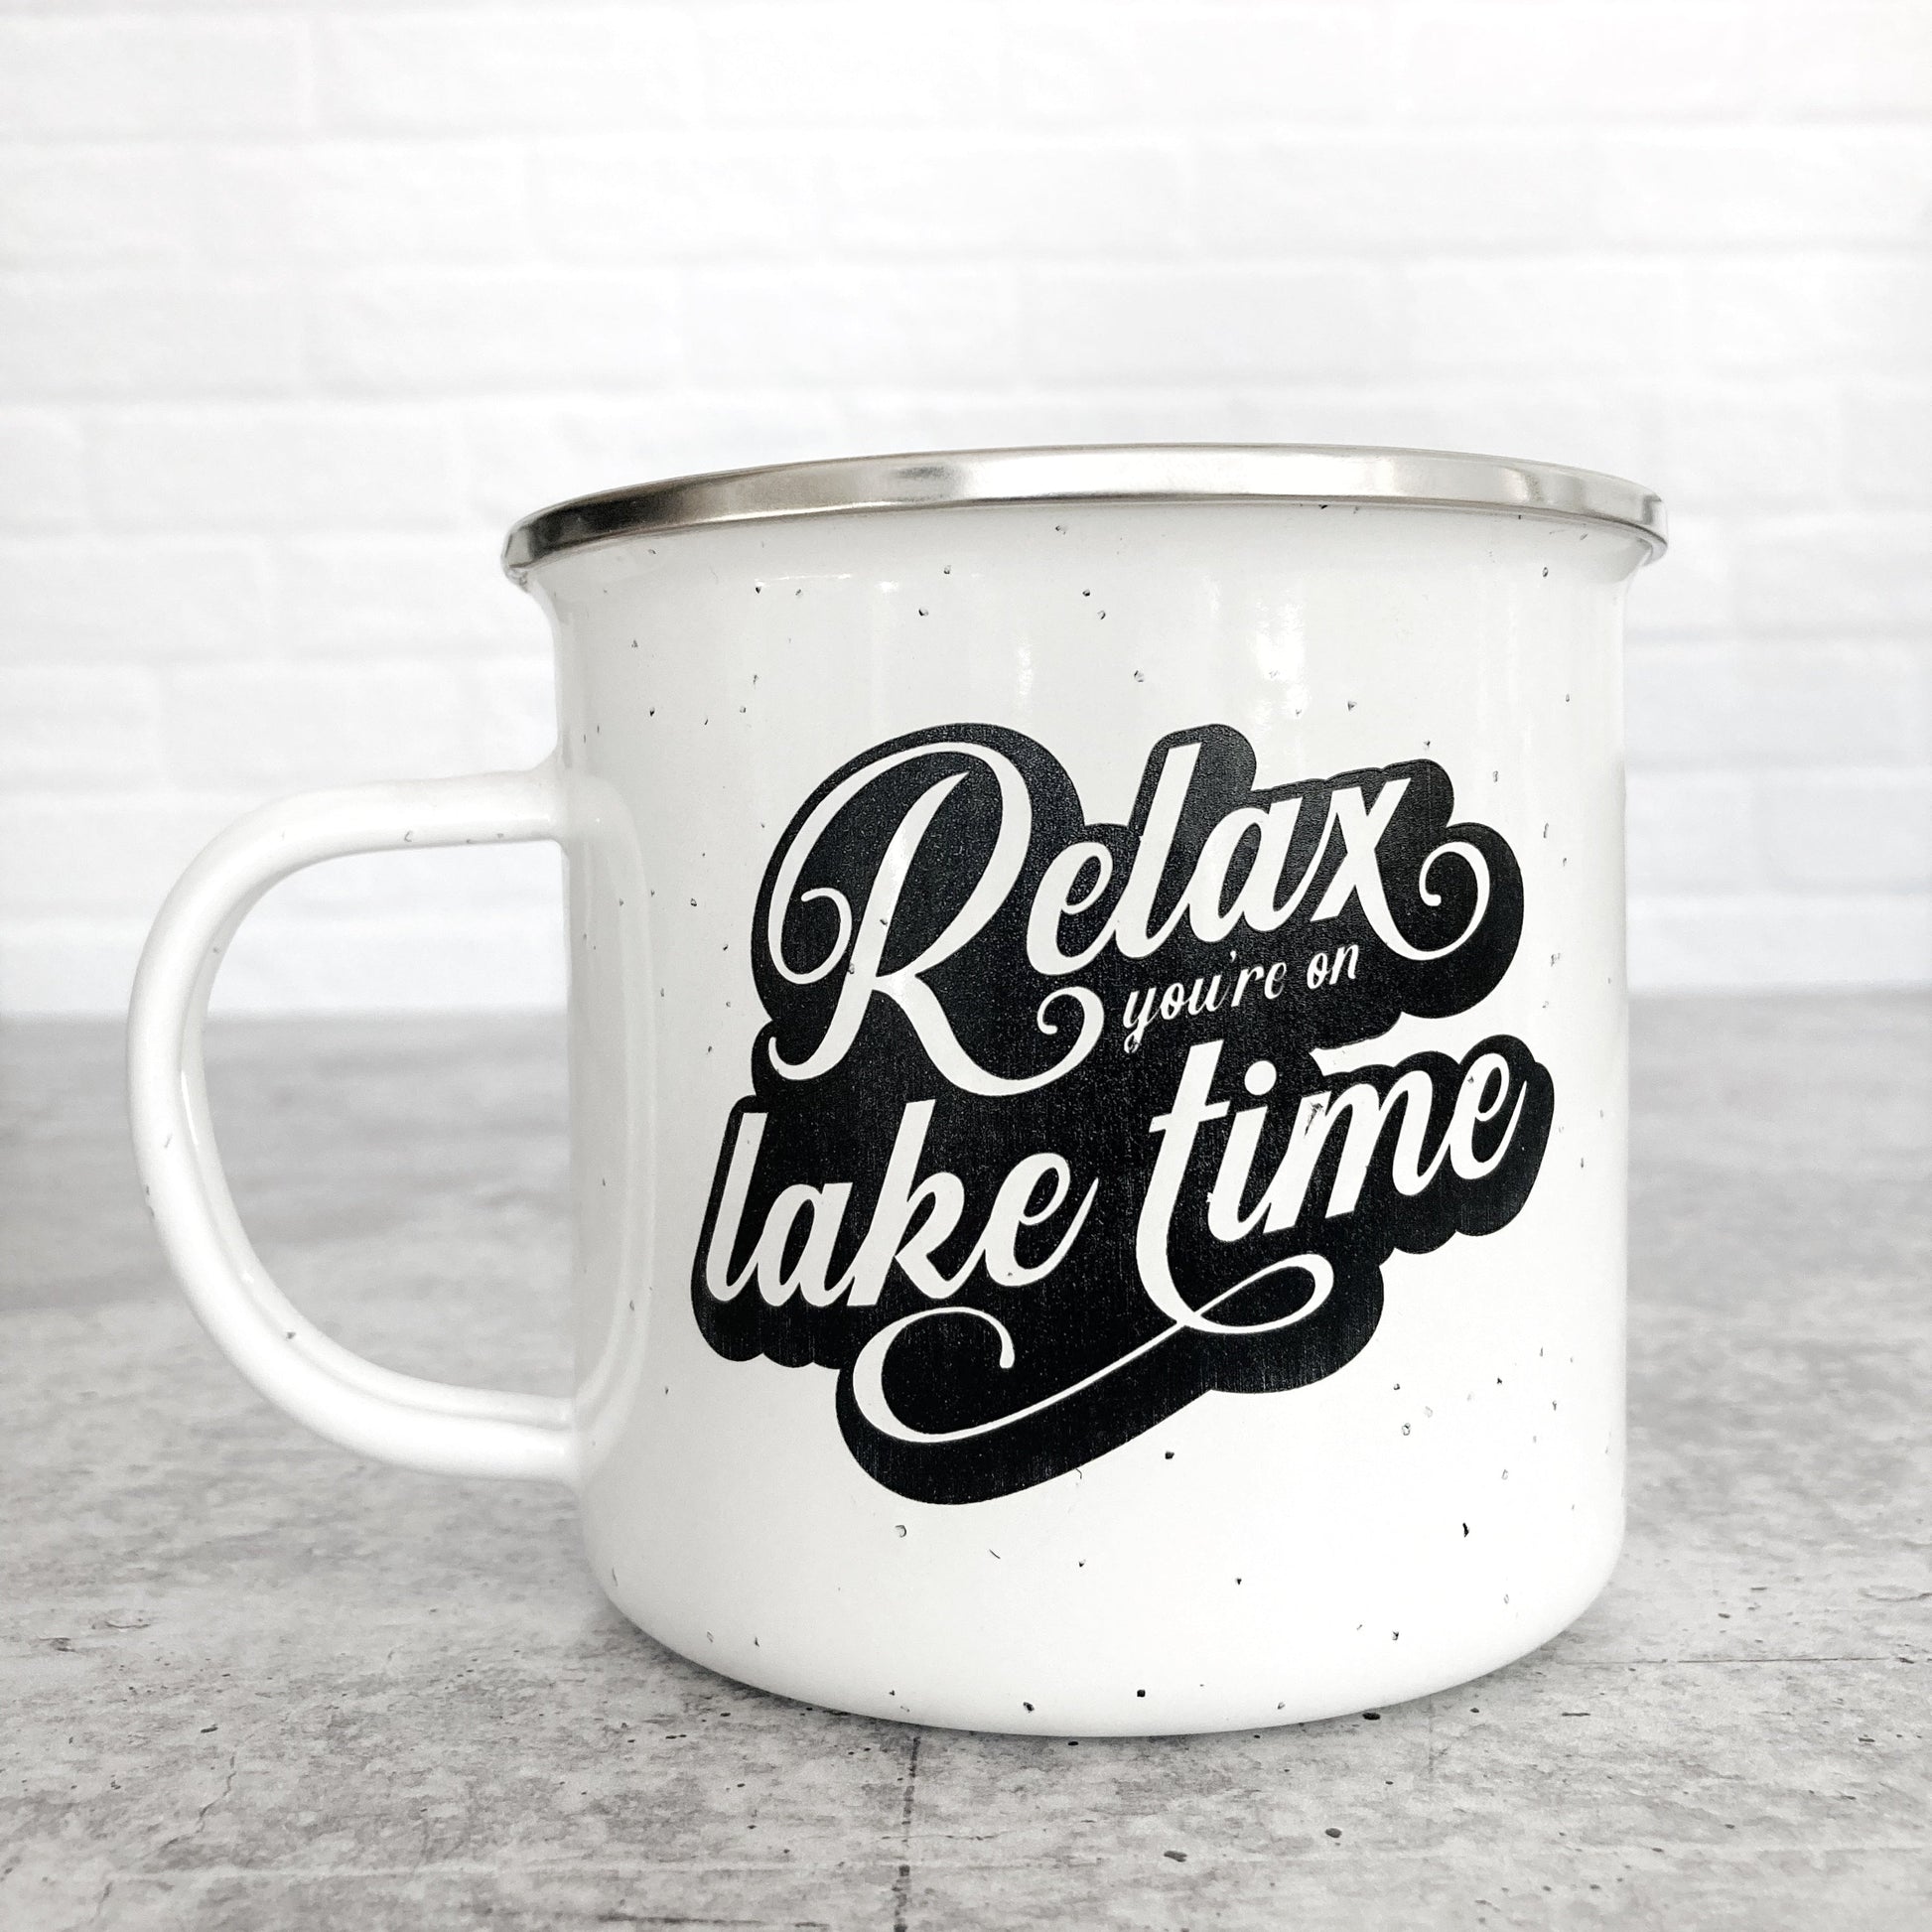 Relax You're on Lake Time Design on a white enamel mug